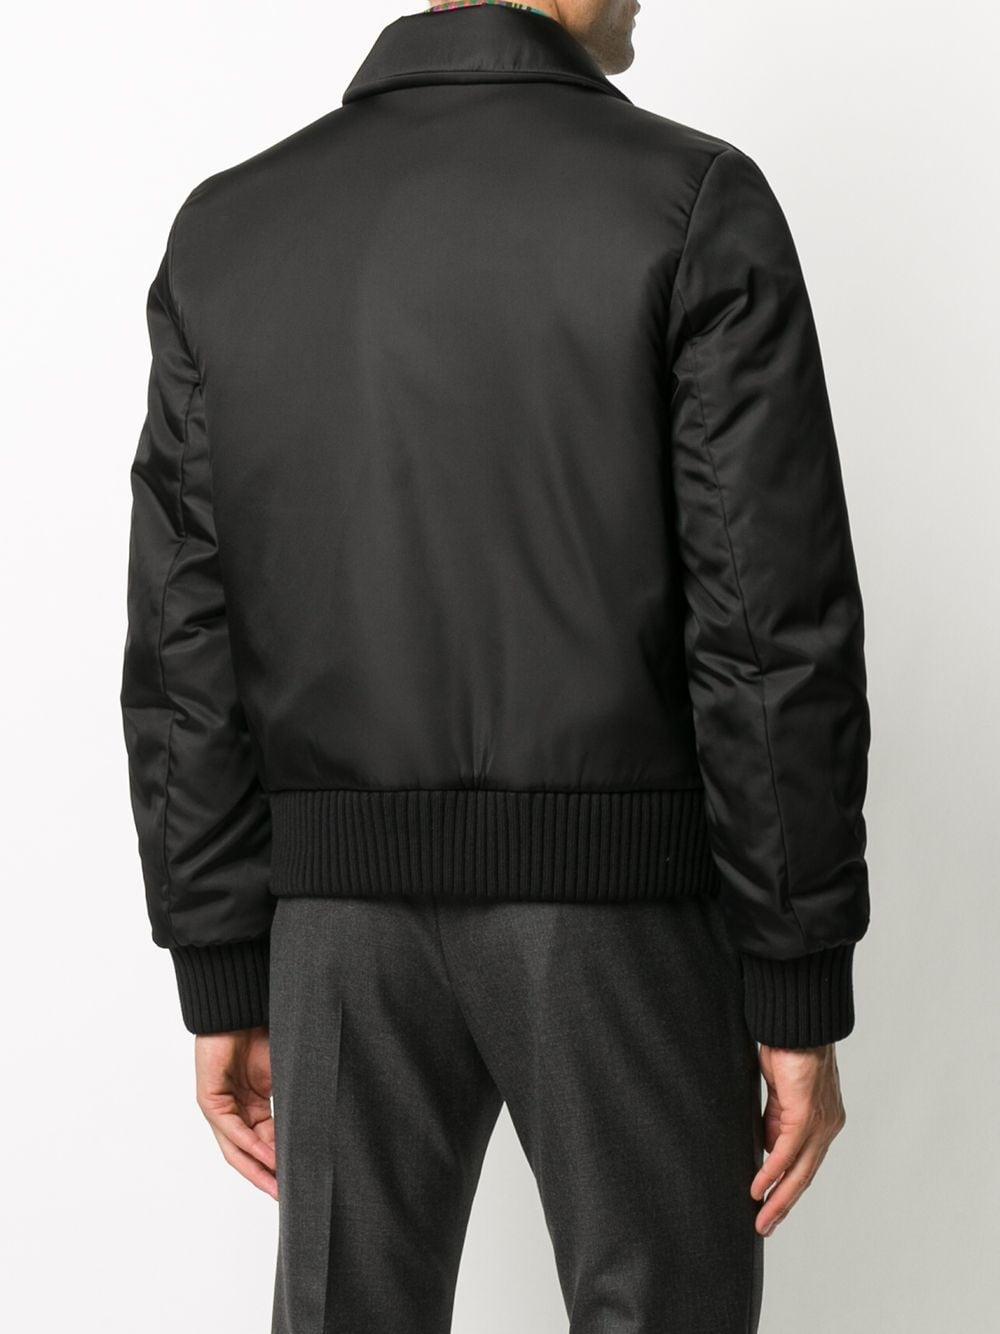 Prada Synthetic Re-nylon Zipped Bomber Jacket in Black for Men - Save ...